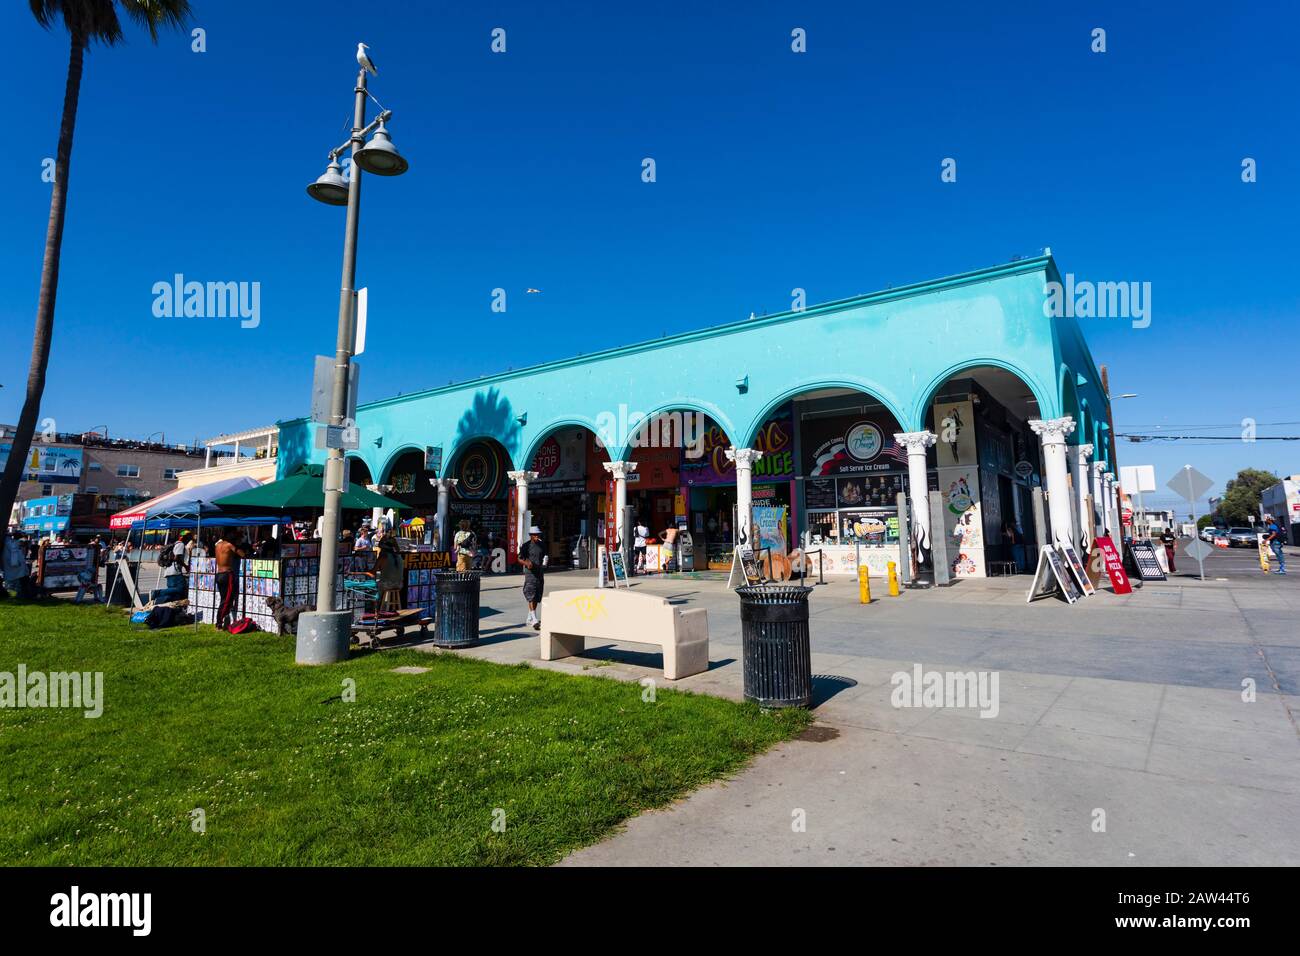 Venice beach park, Santa Monica, Los Angeles, California, United States of america. USA. October 2019 Stock Photo